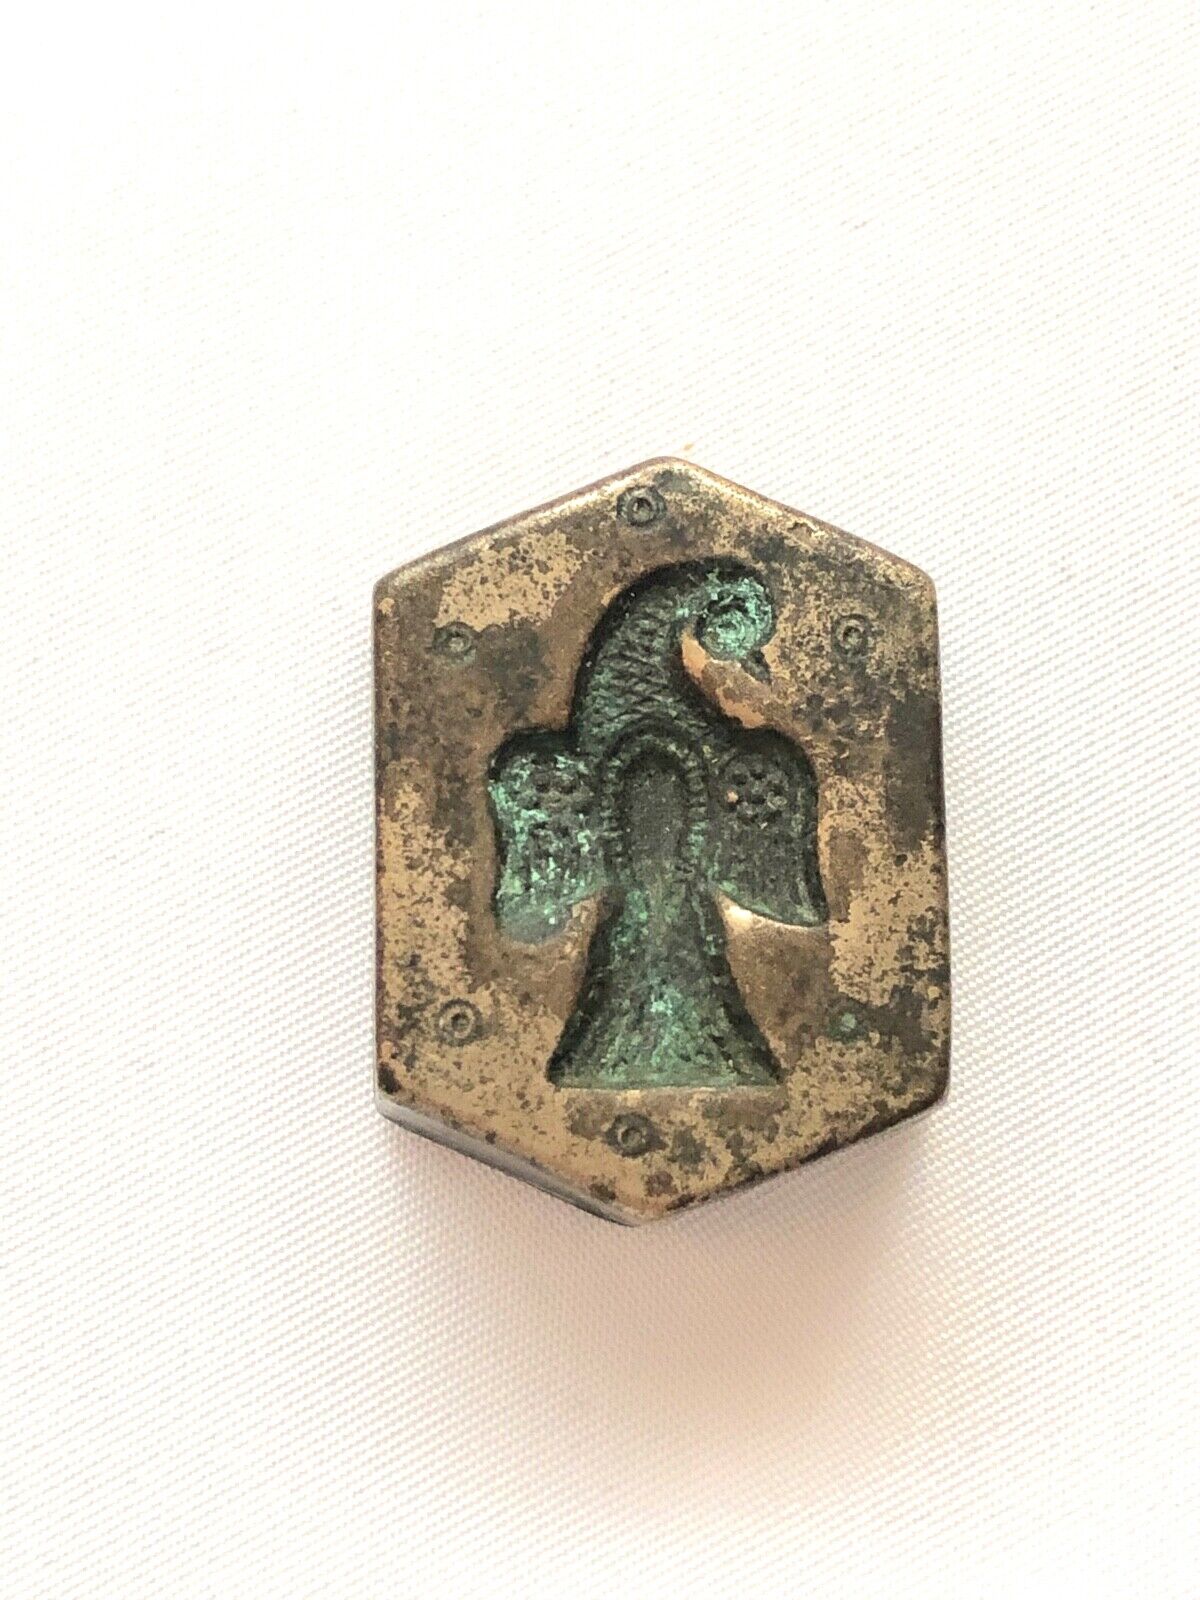 Seljuk Bronze Jewelry Anvil and Molds 11th Century AD Rare Без бренда - фотография #11